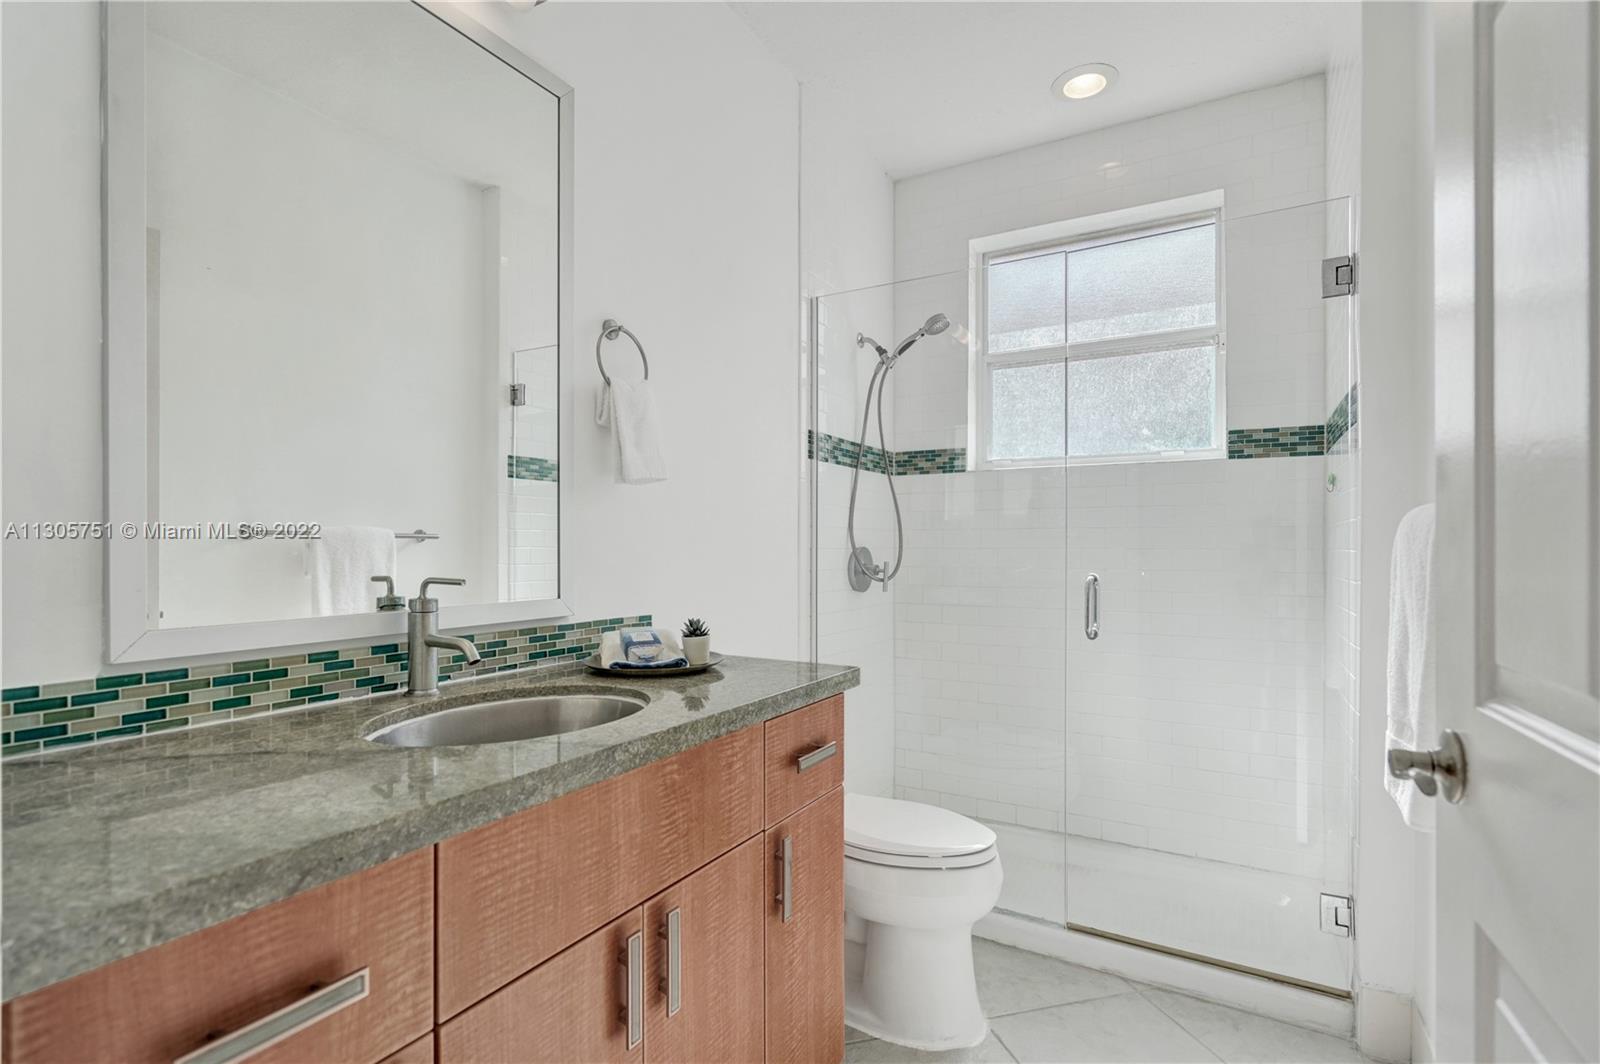 Bathroom #2 with modern wood vanities, marble counters, mosaic backsplash, silver mirror, seamless glass shower.